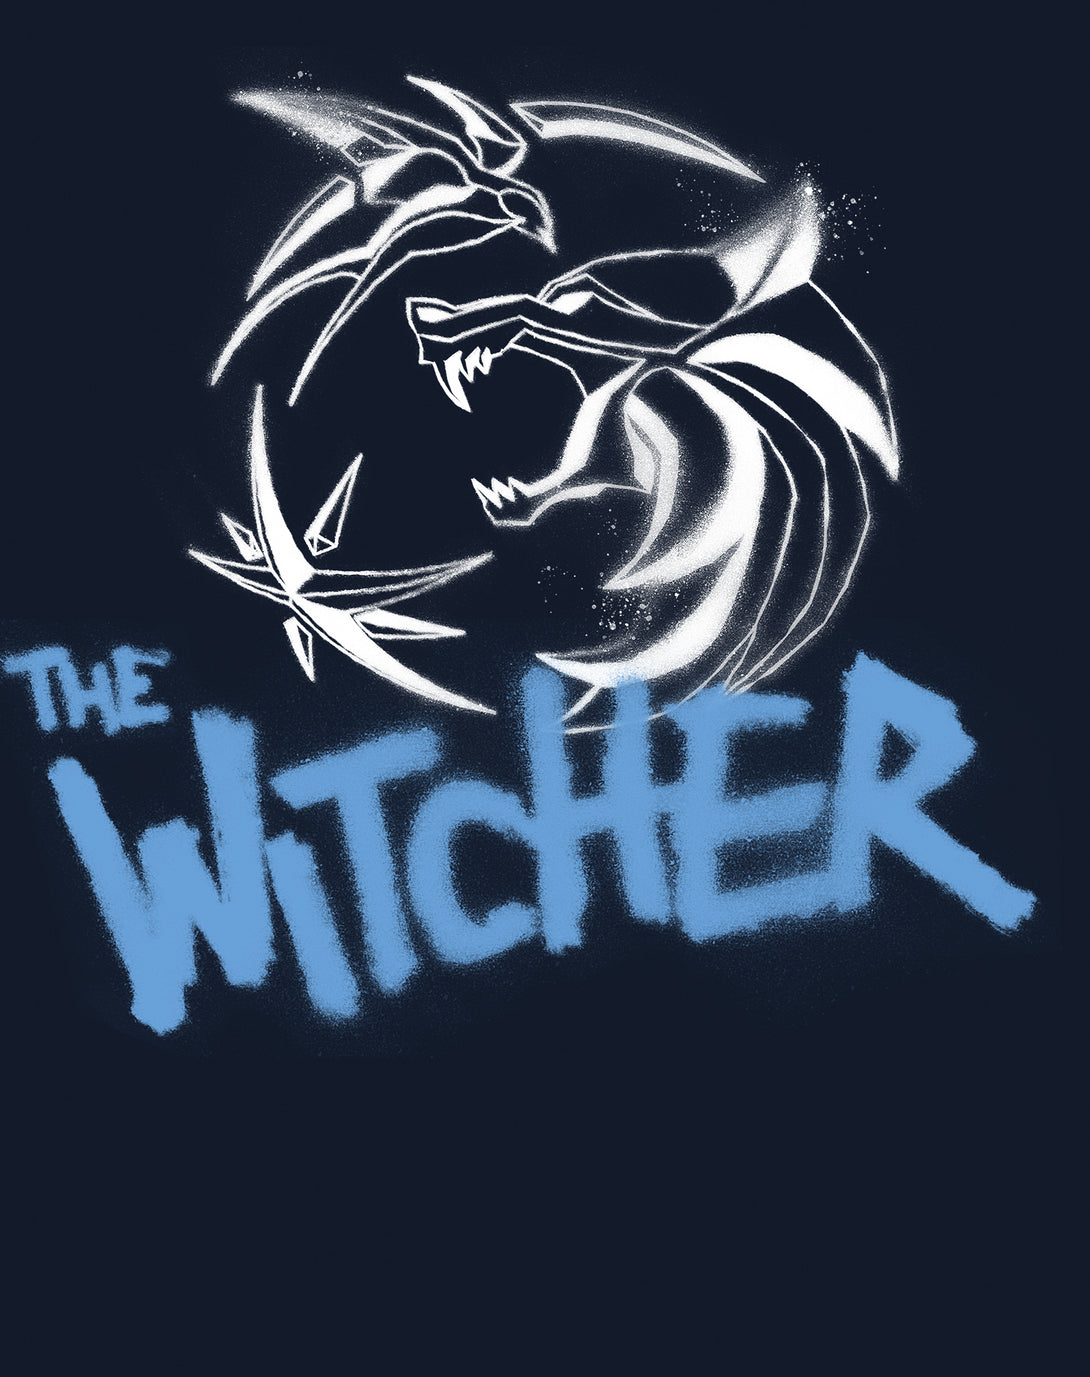 The Witcher Logo Stencil Slayer Official Women's T-Shirt Navy - Urban Species Design Close Up